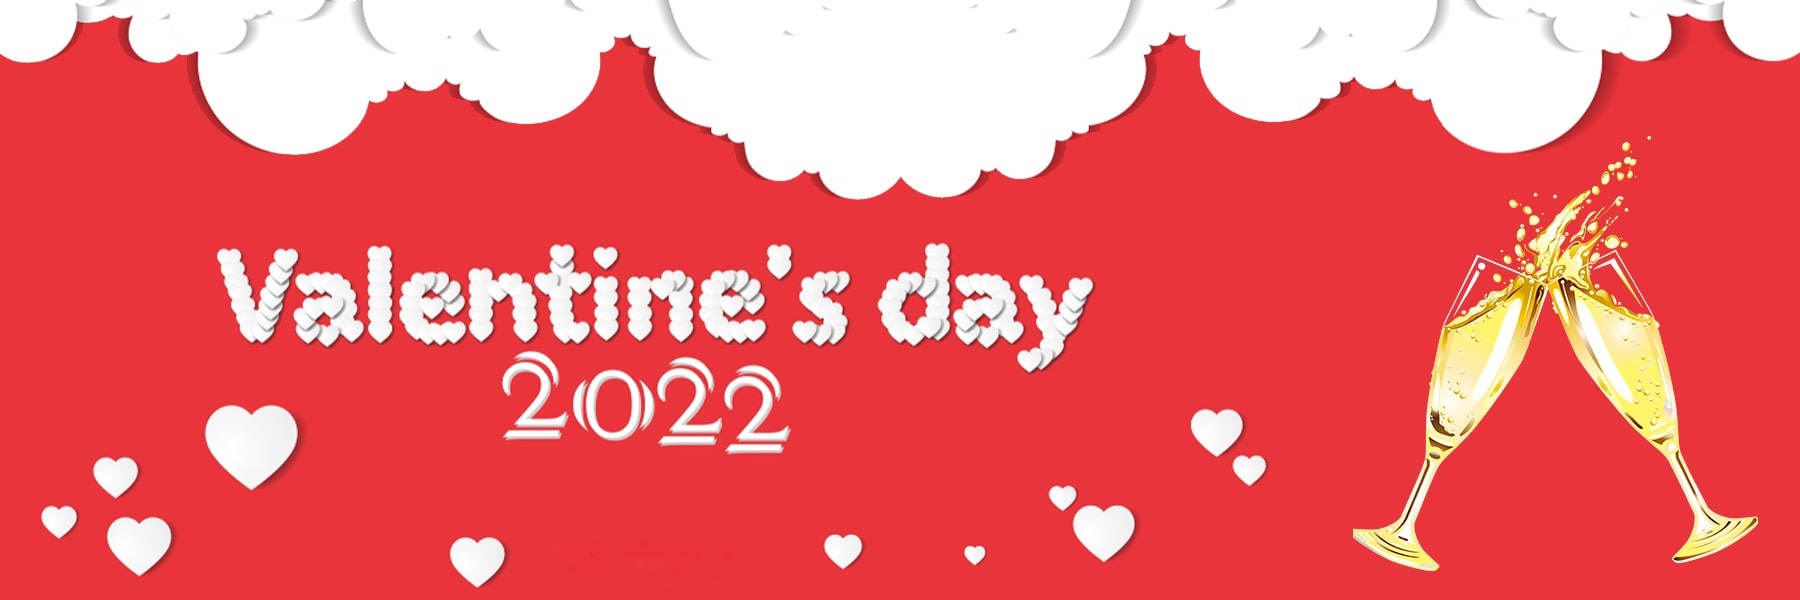 Valentine's Day 2022 - Where to Celebrate in Gwalior?